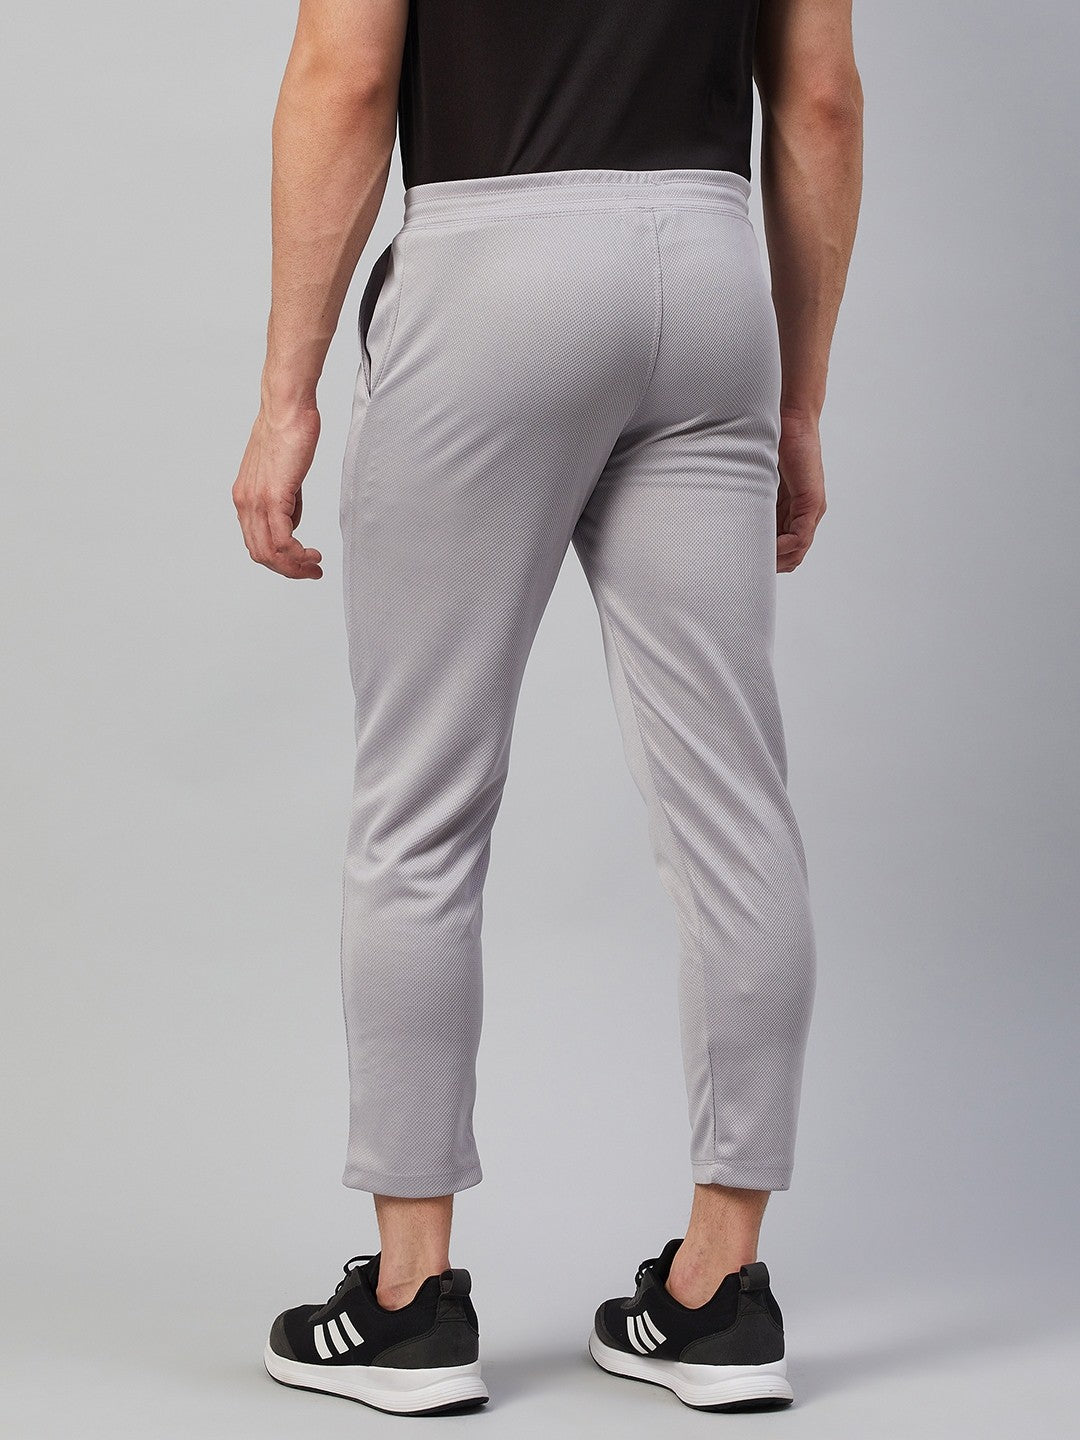 Men Printed Grey Track Pants (Pack of 1)